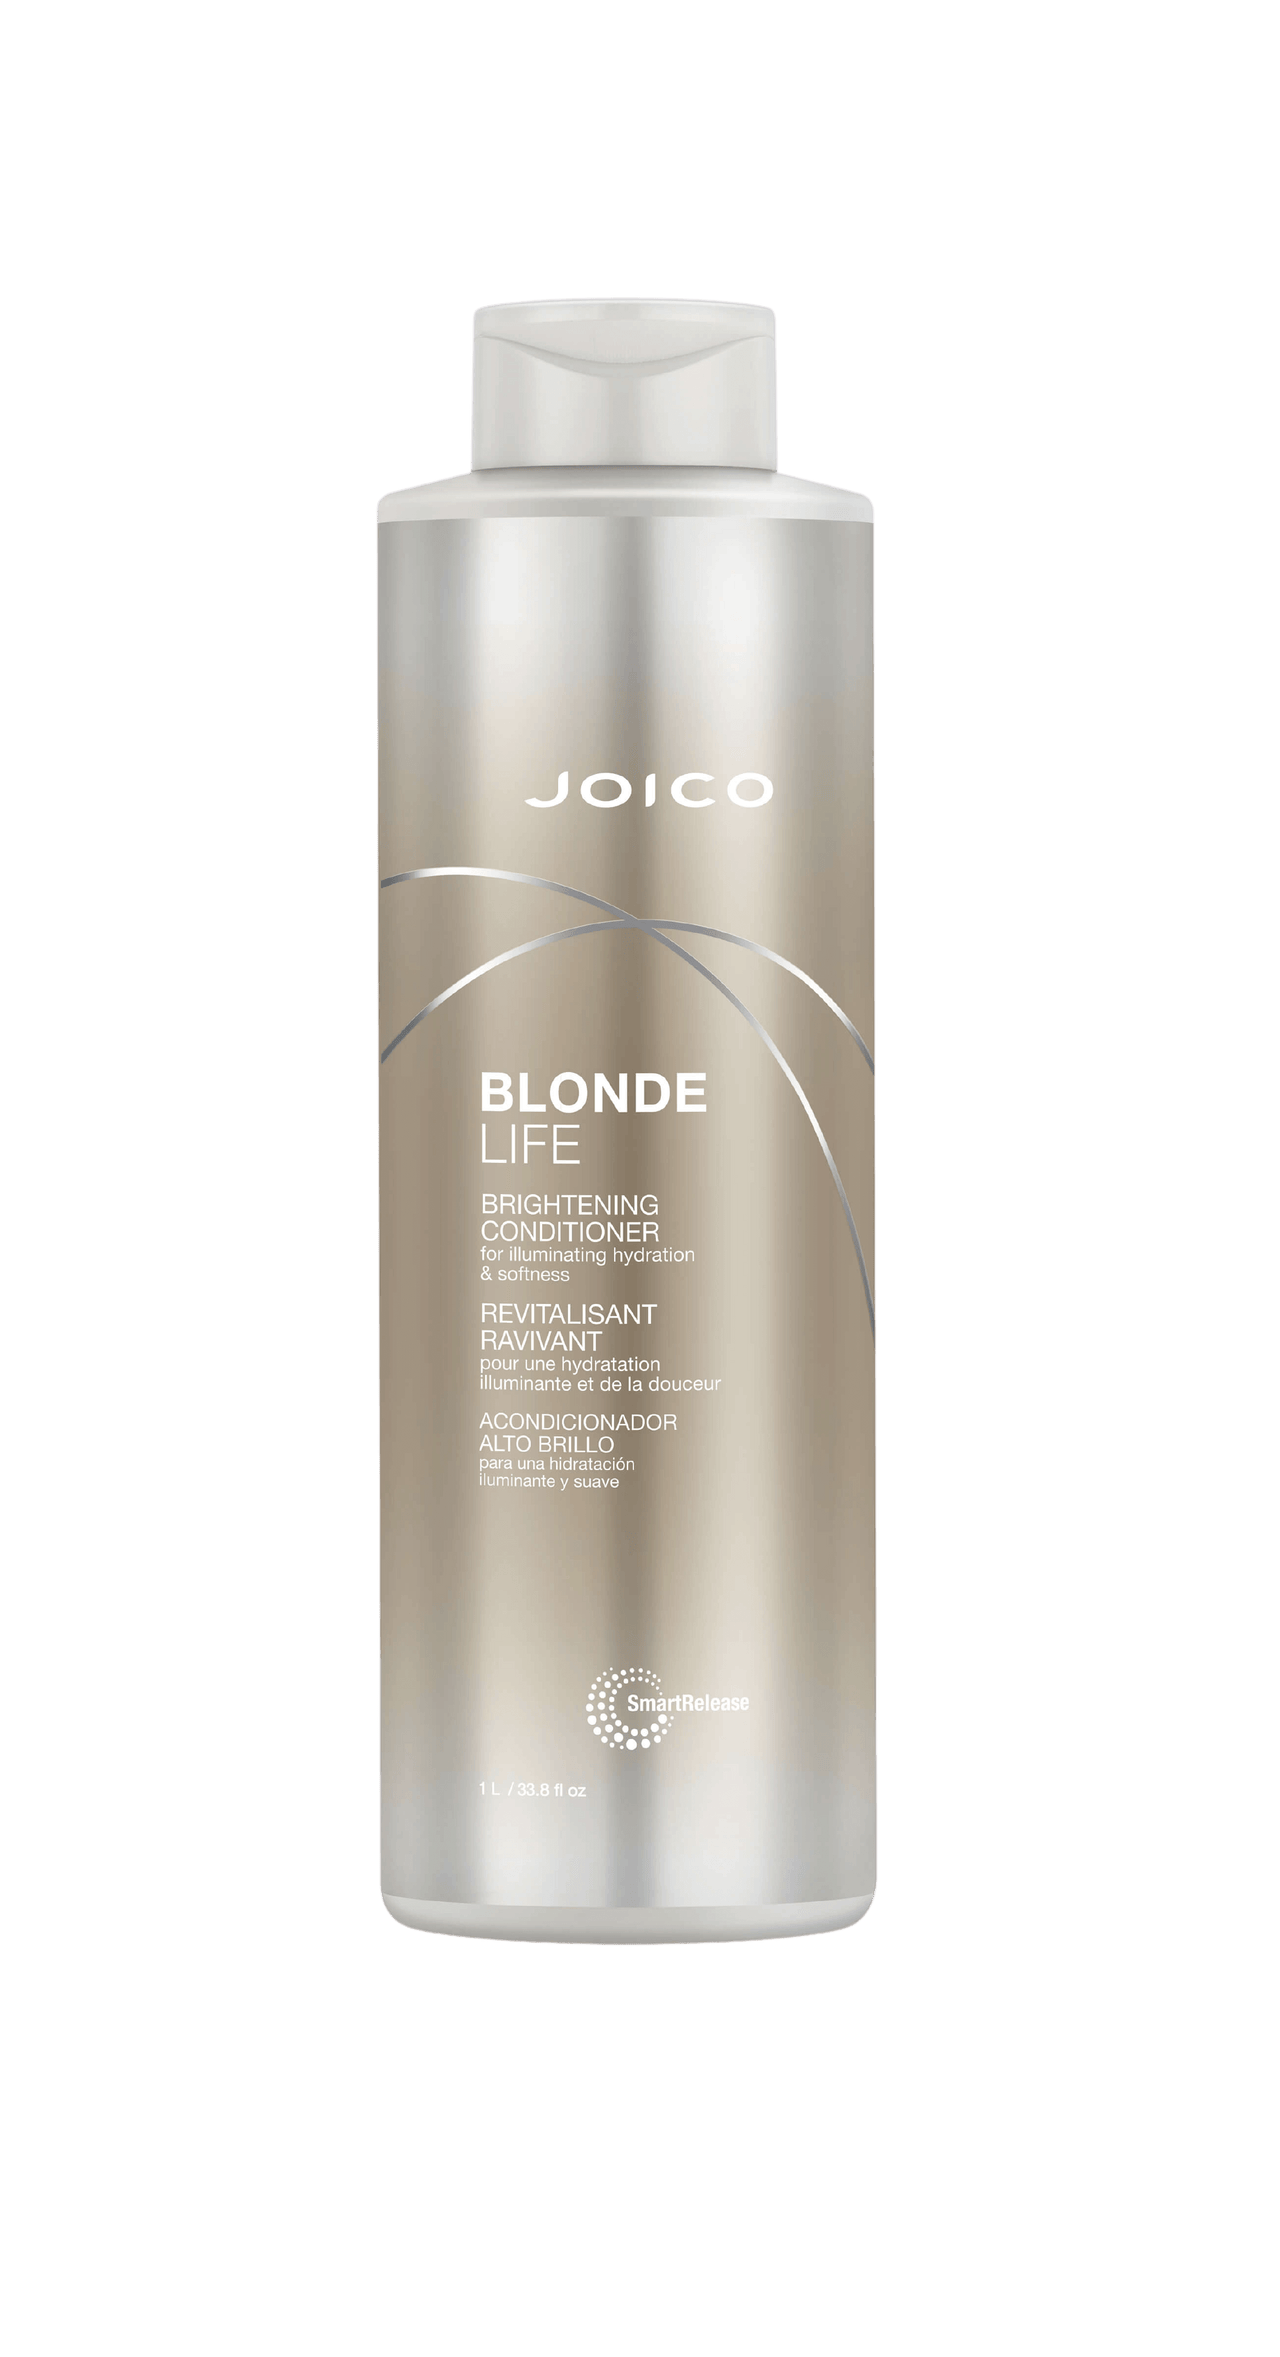 Joico Blonde Life Brightening Conditioner 33.8oz  Bottle